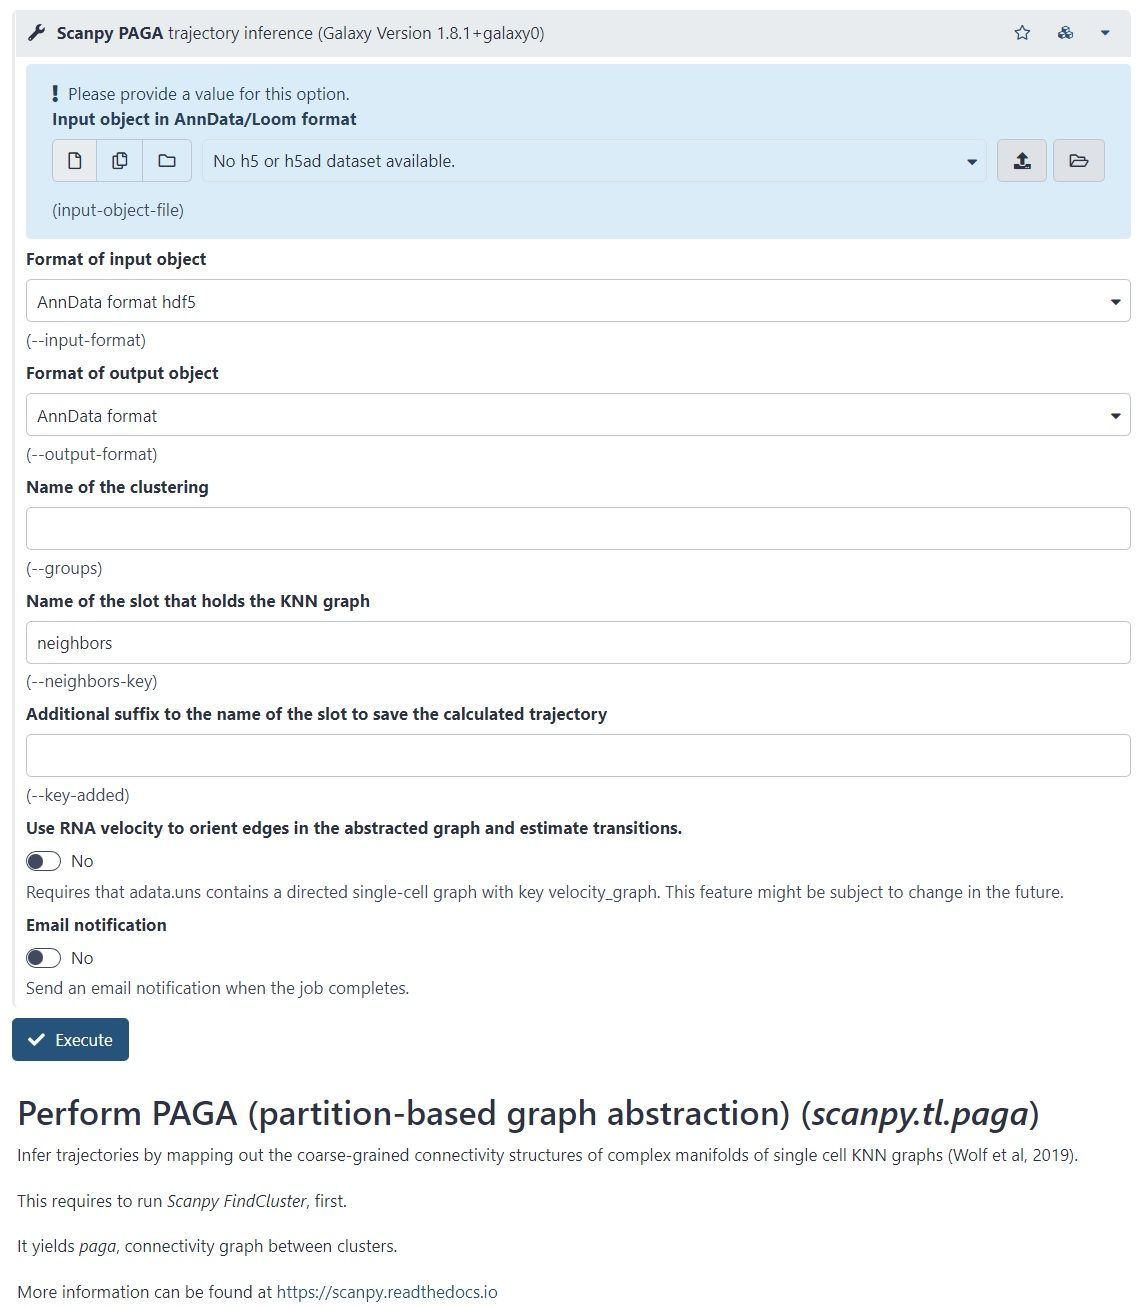 Screenshot of the interface of ‘Scanpy PAGA’ Galaxy tool